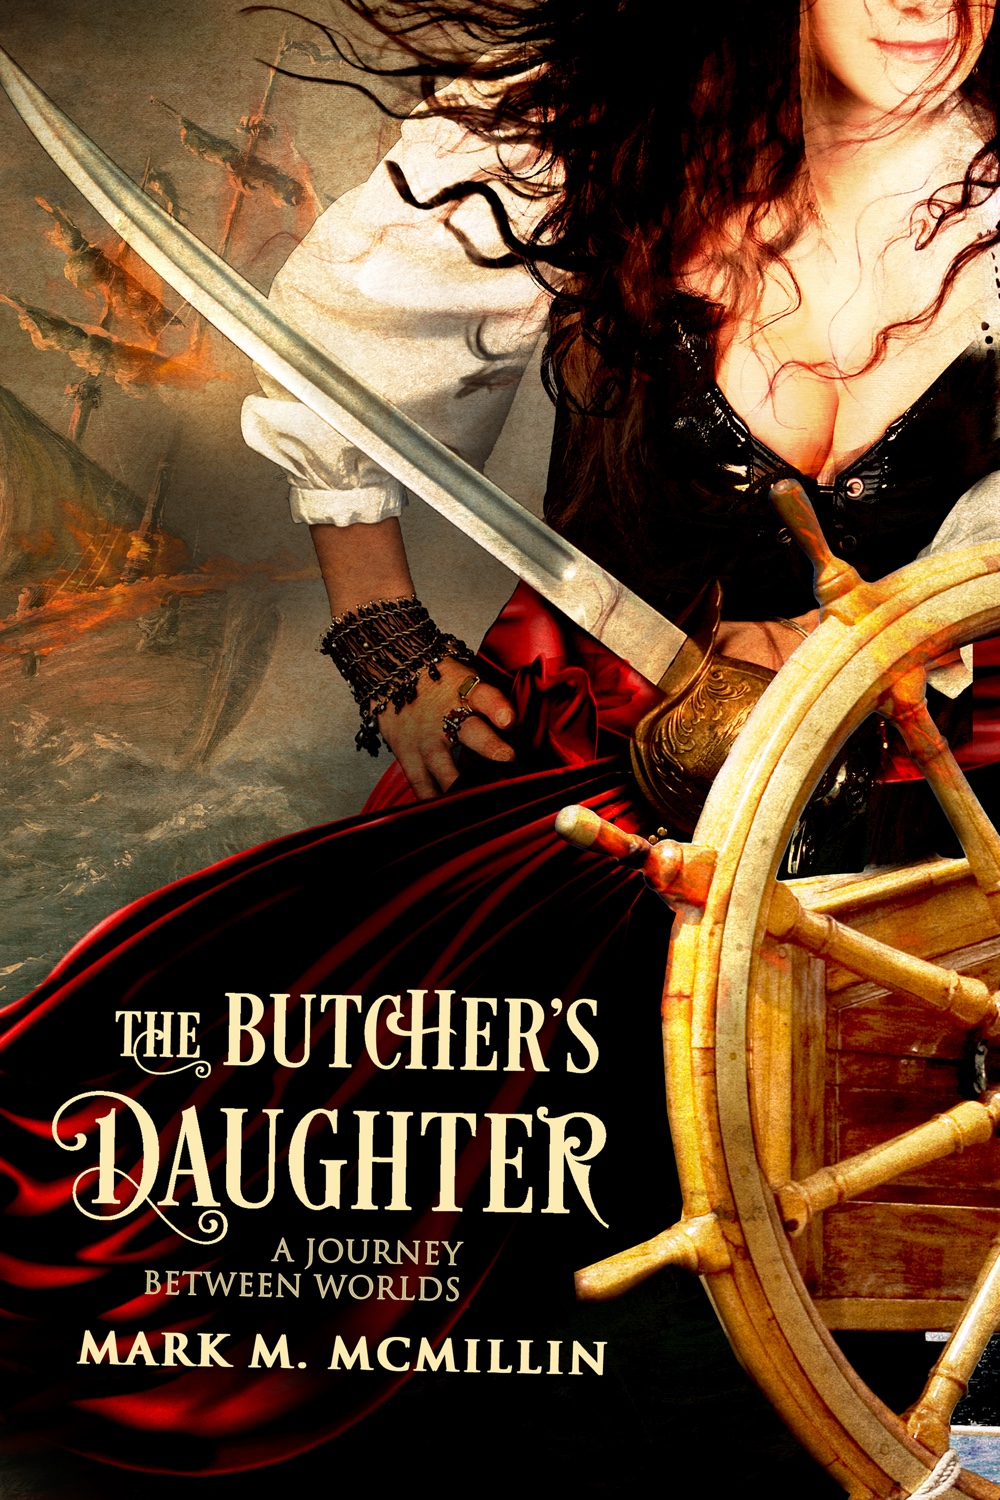 Journey between. The Butchers daughter. Батчер. Холли Батчер история. The Butcher's daughter Пермь.